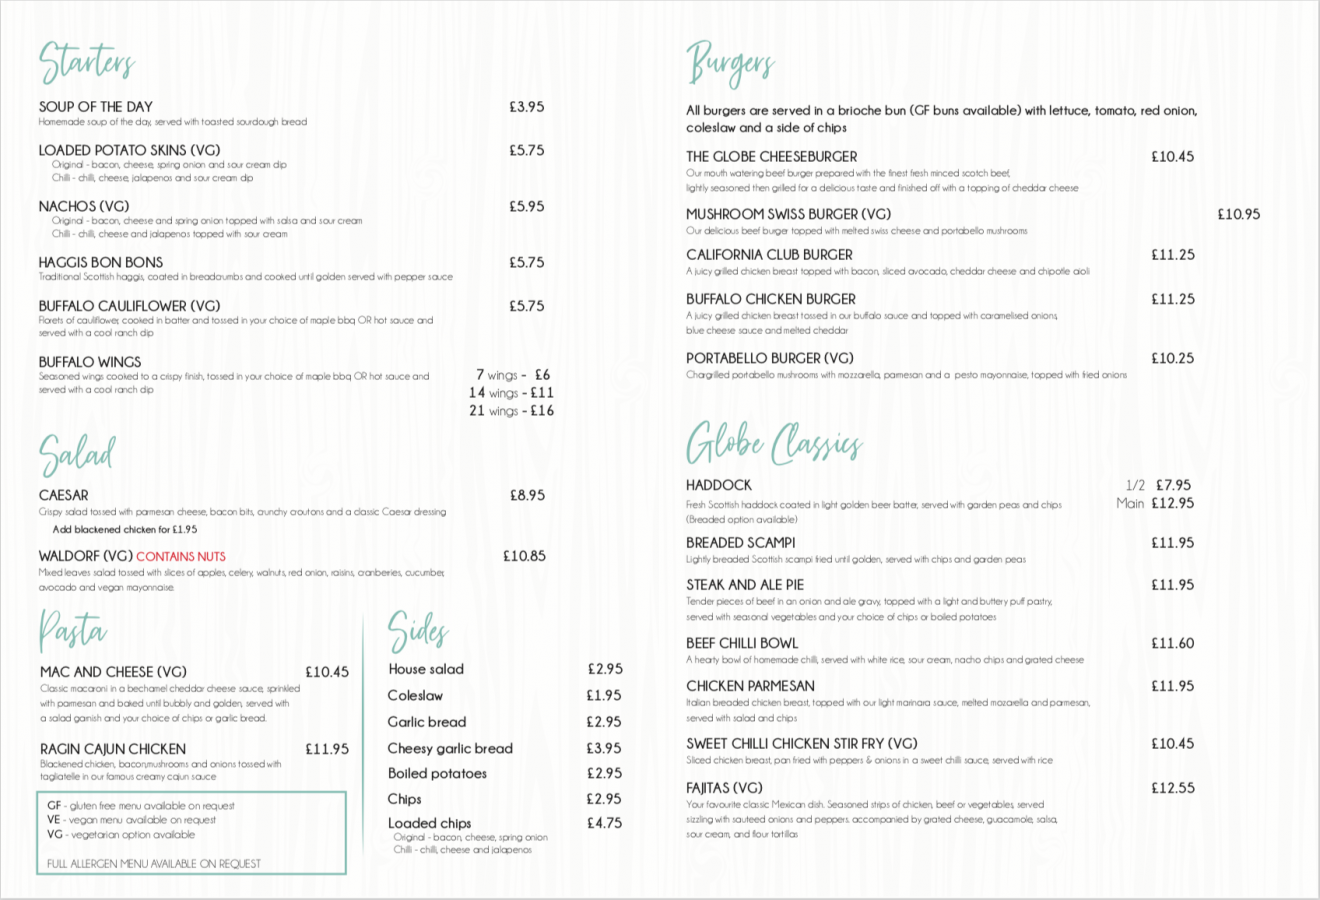 vienna inn menu prices